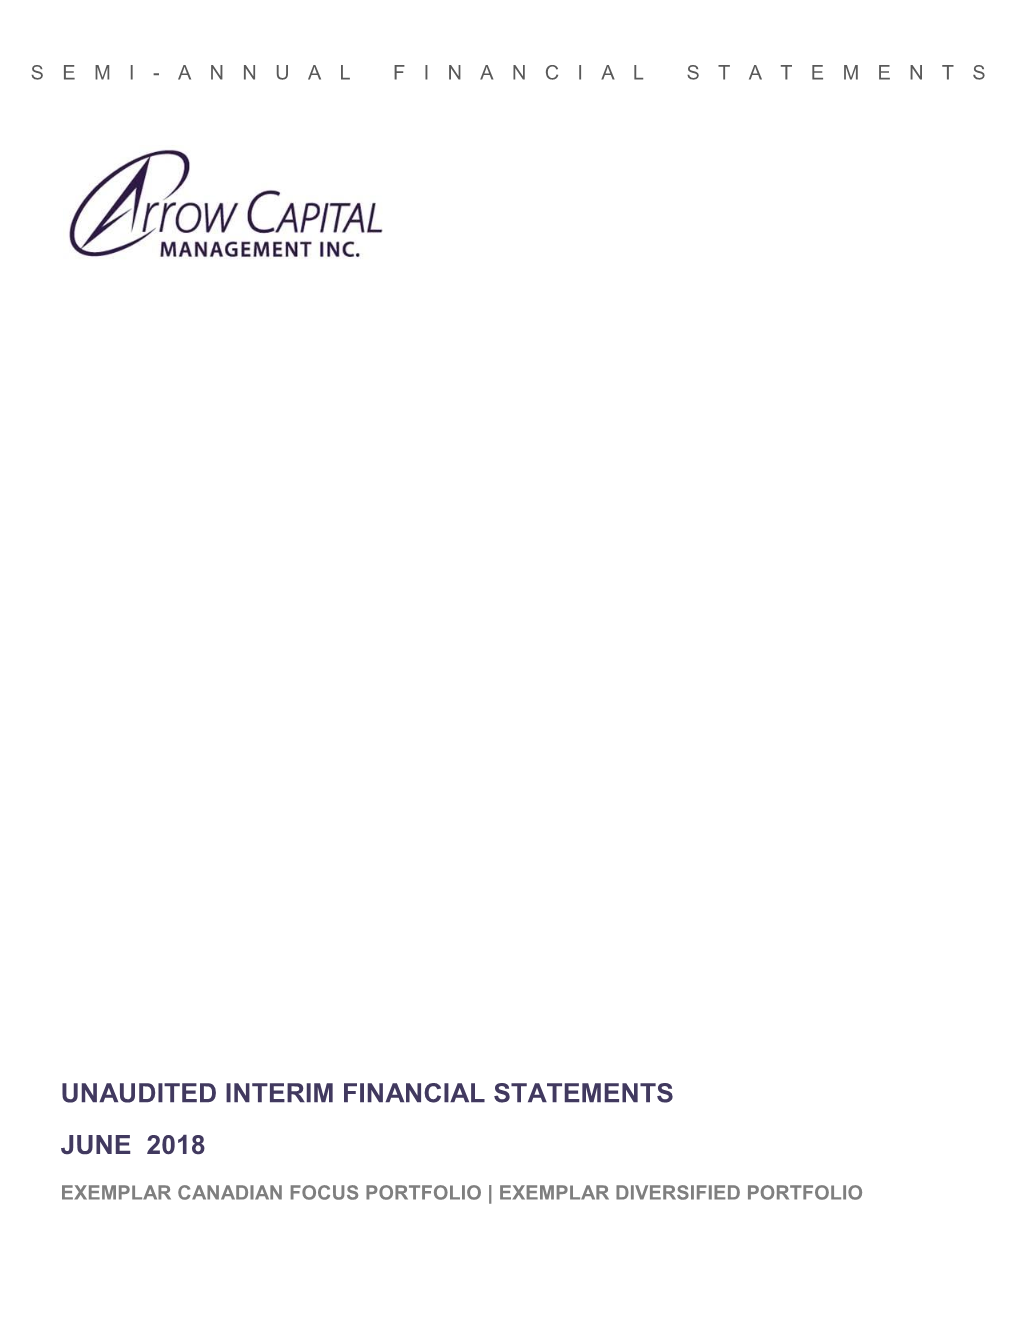 2018 Semi-Annual Financial Statements